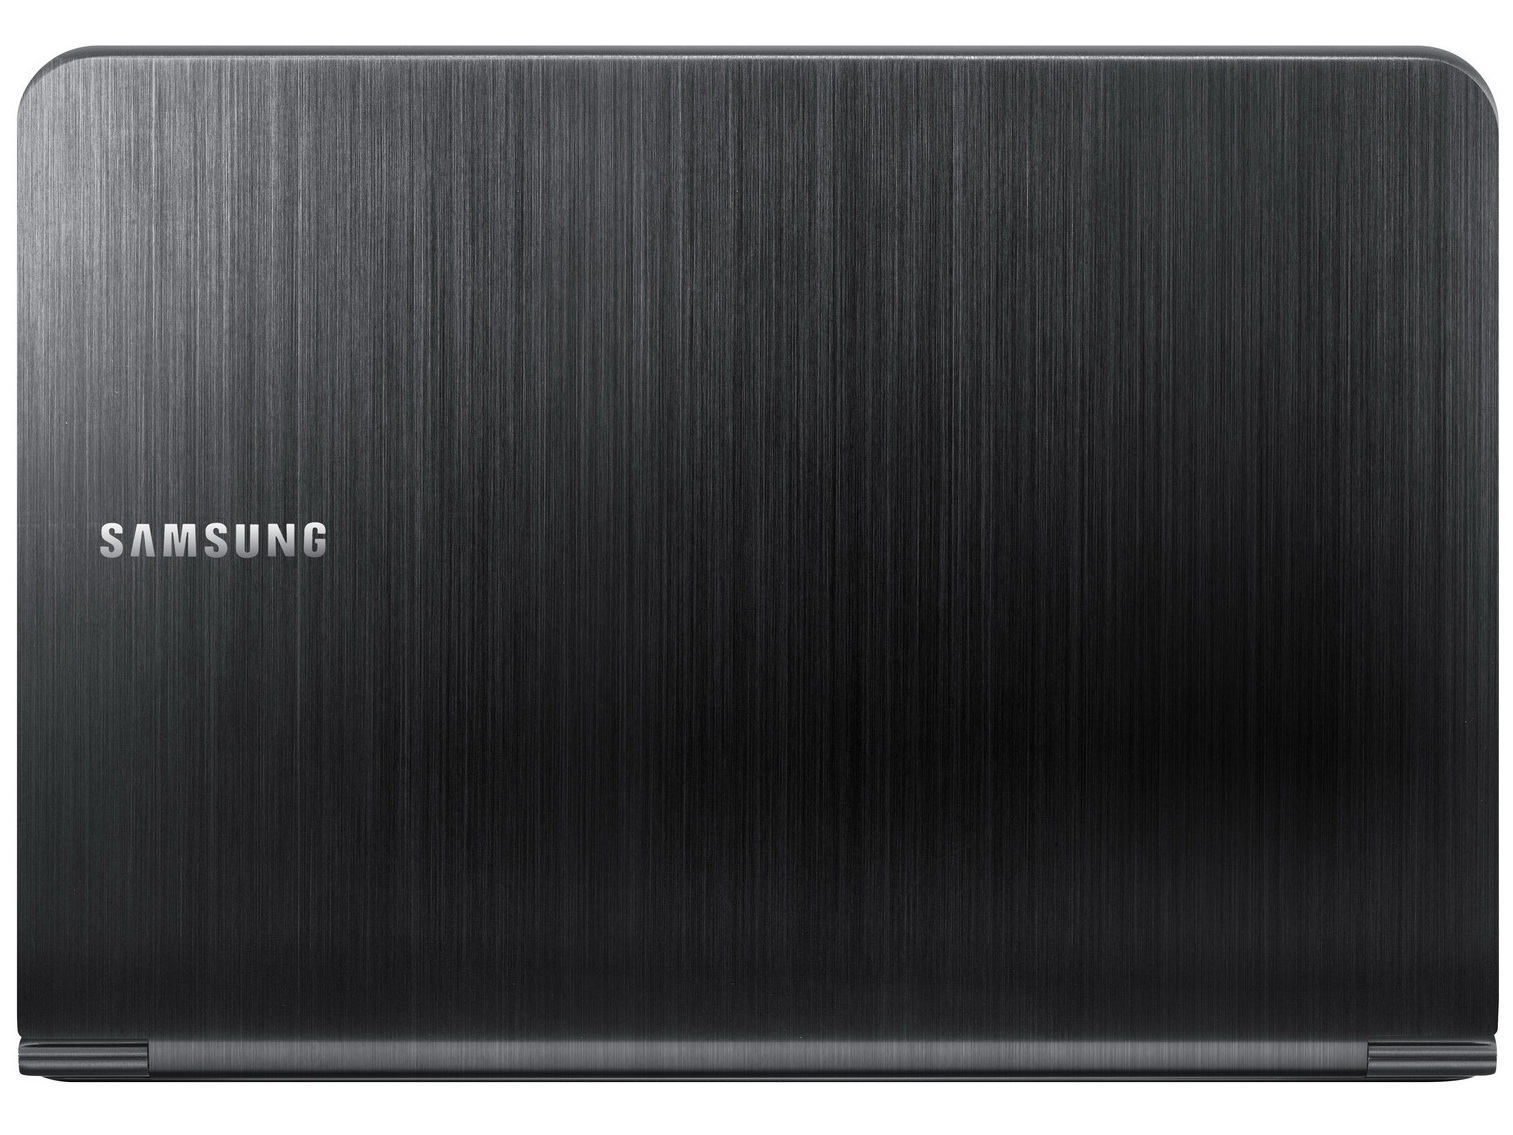 Samsung series 4200